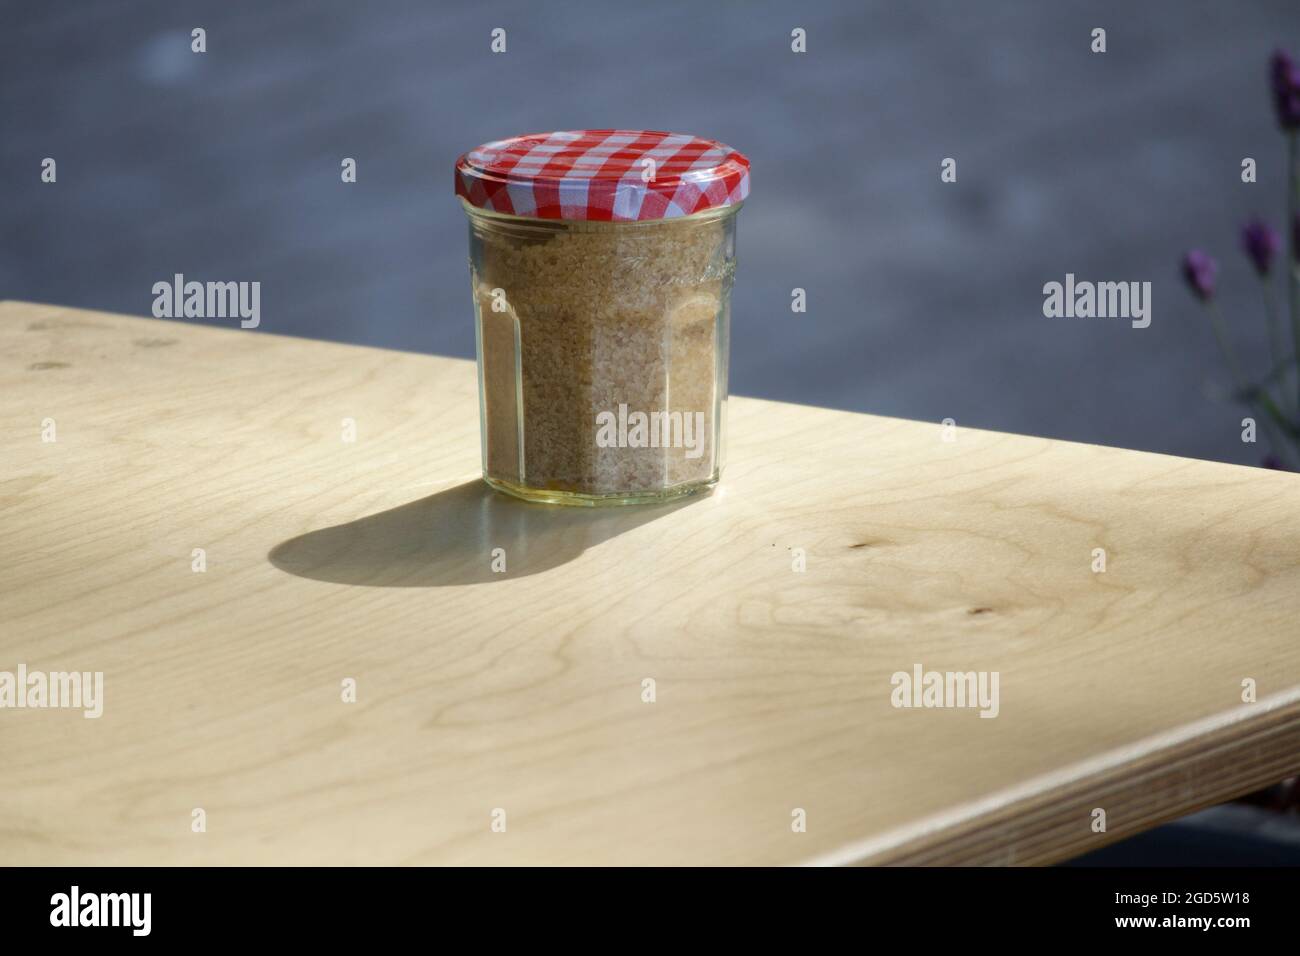 Jam jar and Demerara sugar on table Stock Photo